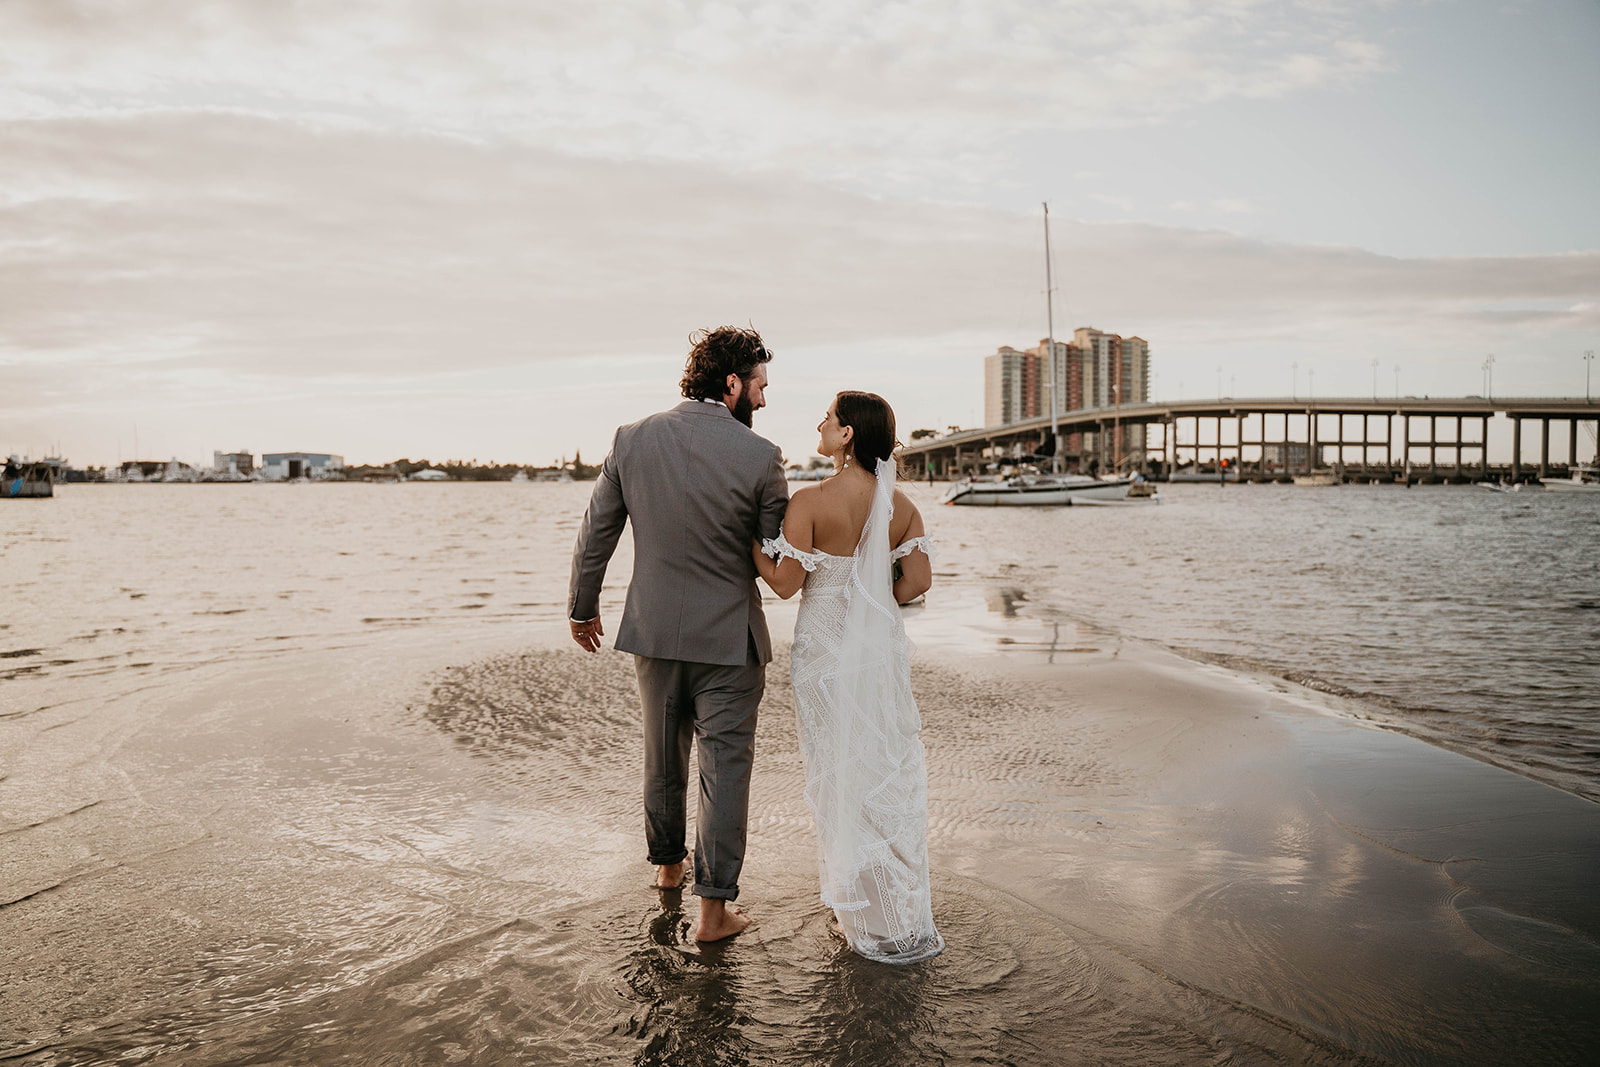 Waterfront Dock Bride and Groom Wedding Portraits